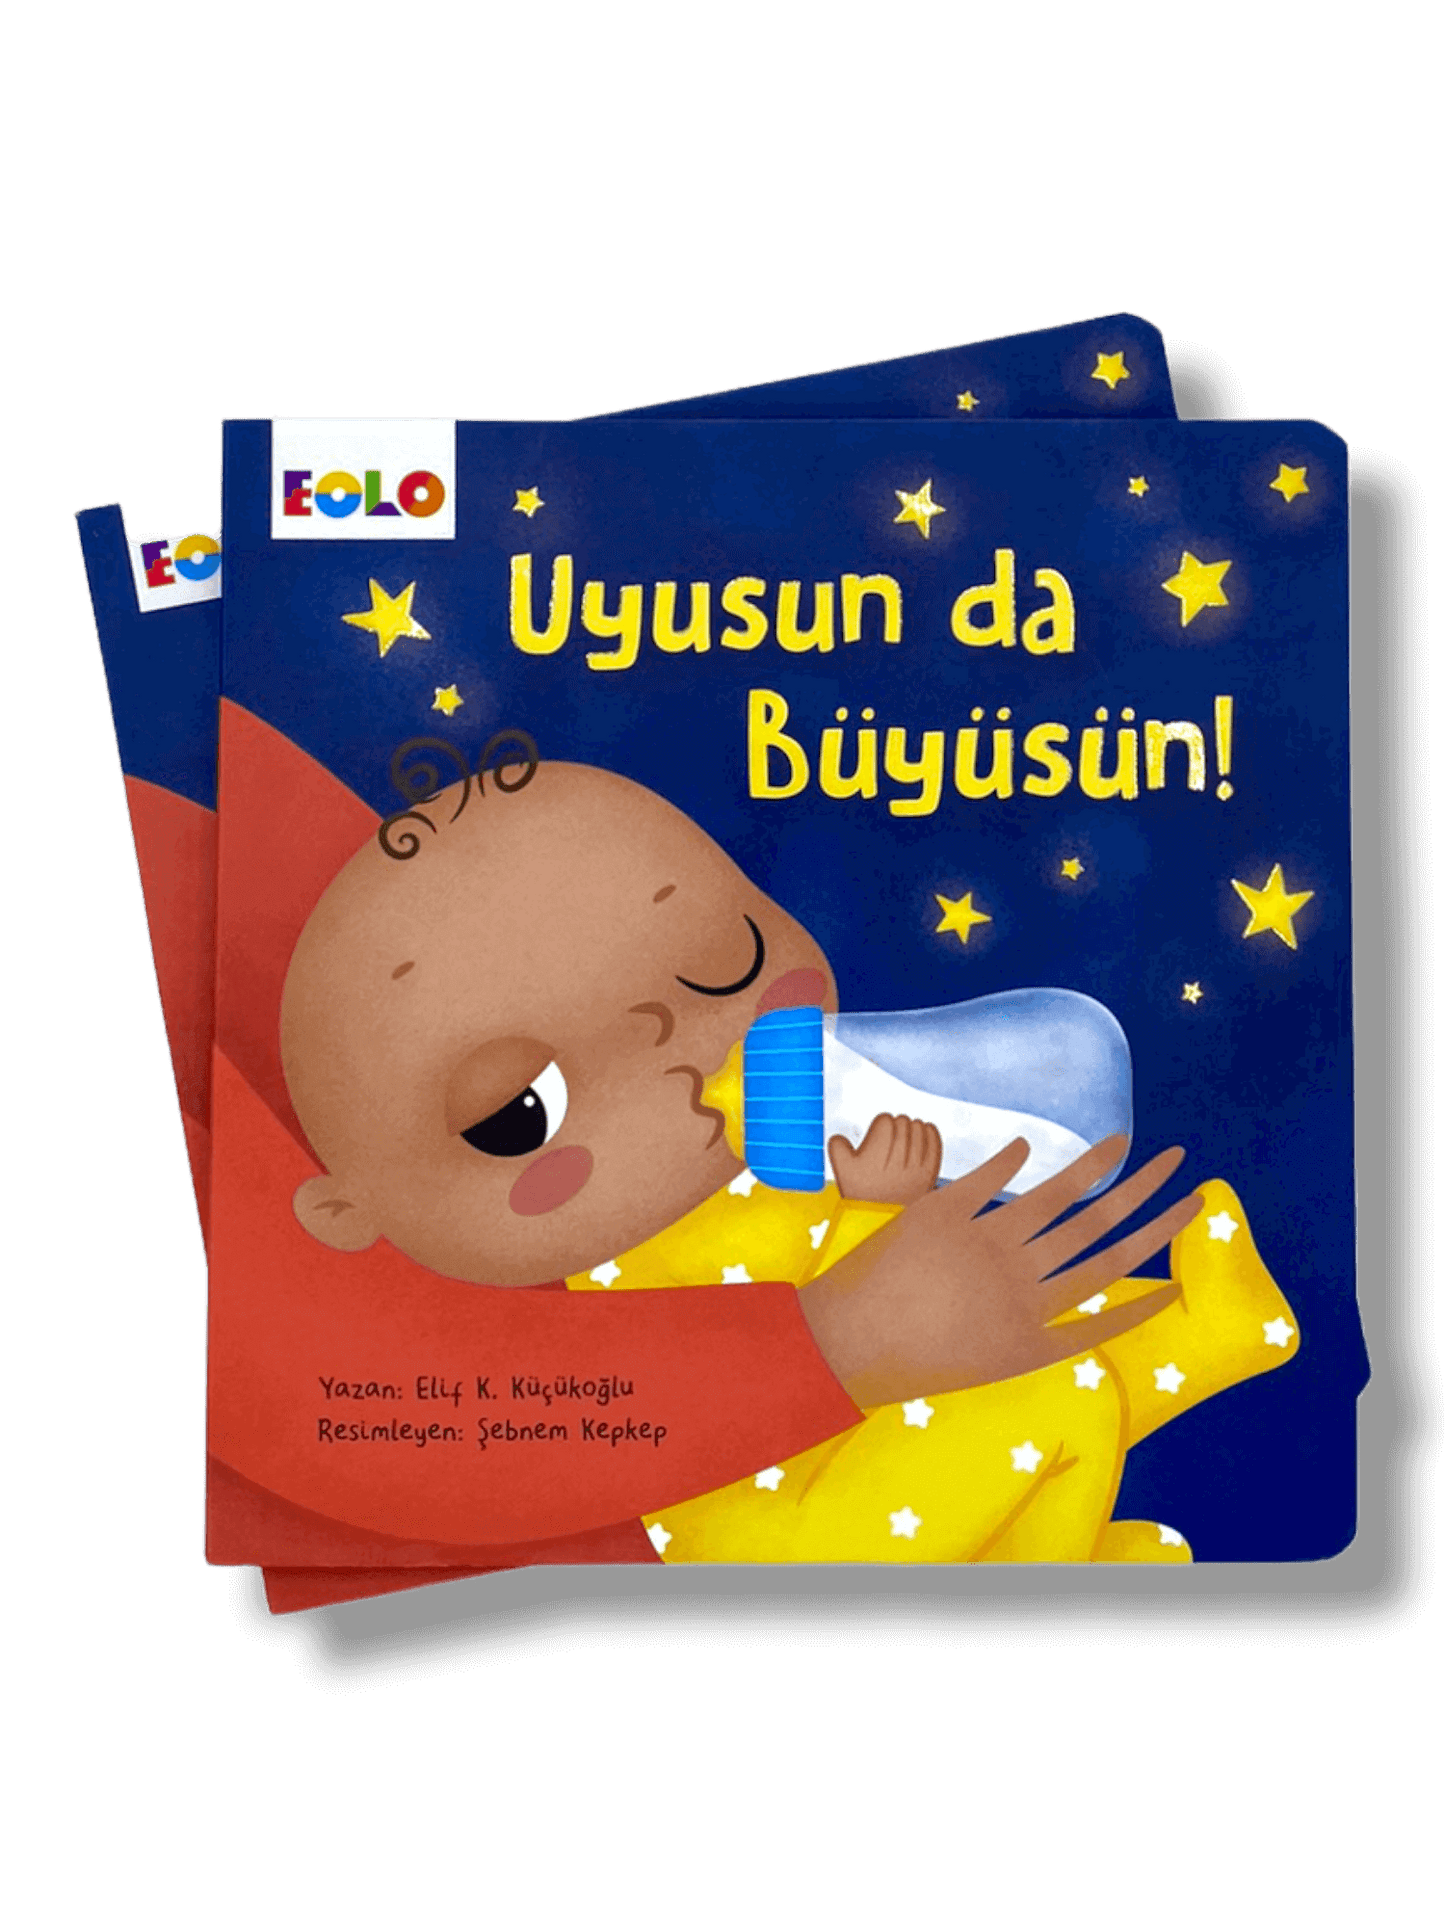 Load image into Gallery viewer, Uyusun da Büyüsün - (Good night story)
